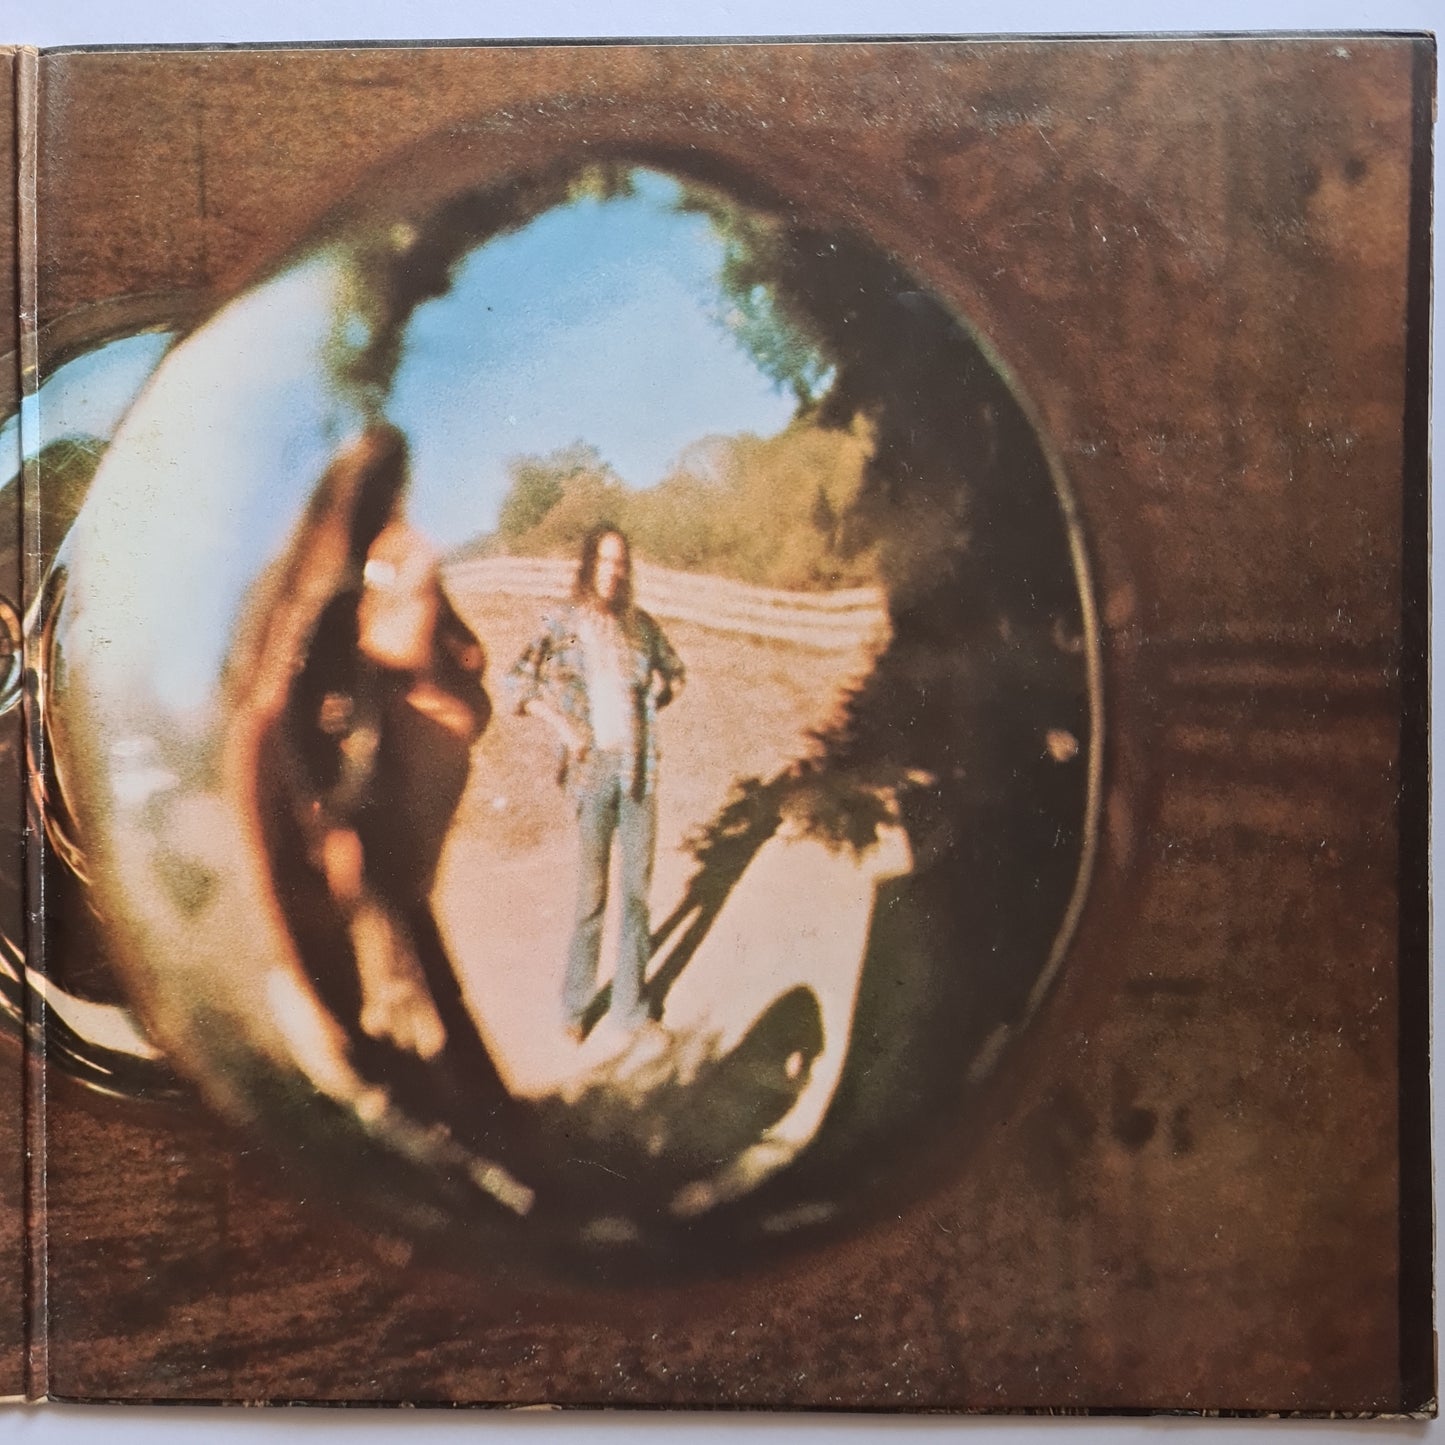 Neil Young – Harvest - 1972 (Cream Vinyl - 1978 Netherlands Pressing) - Vinyl Record